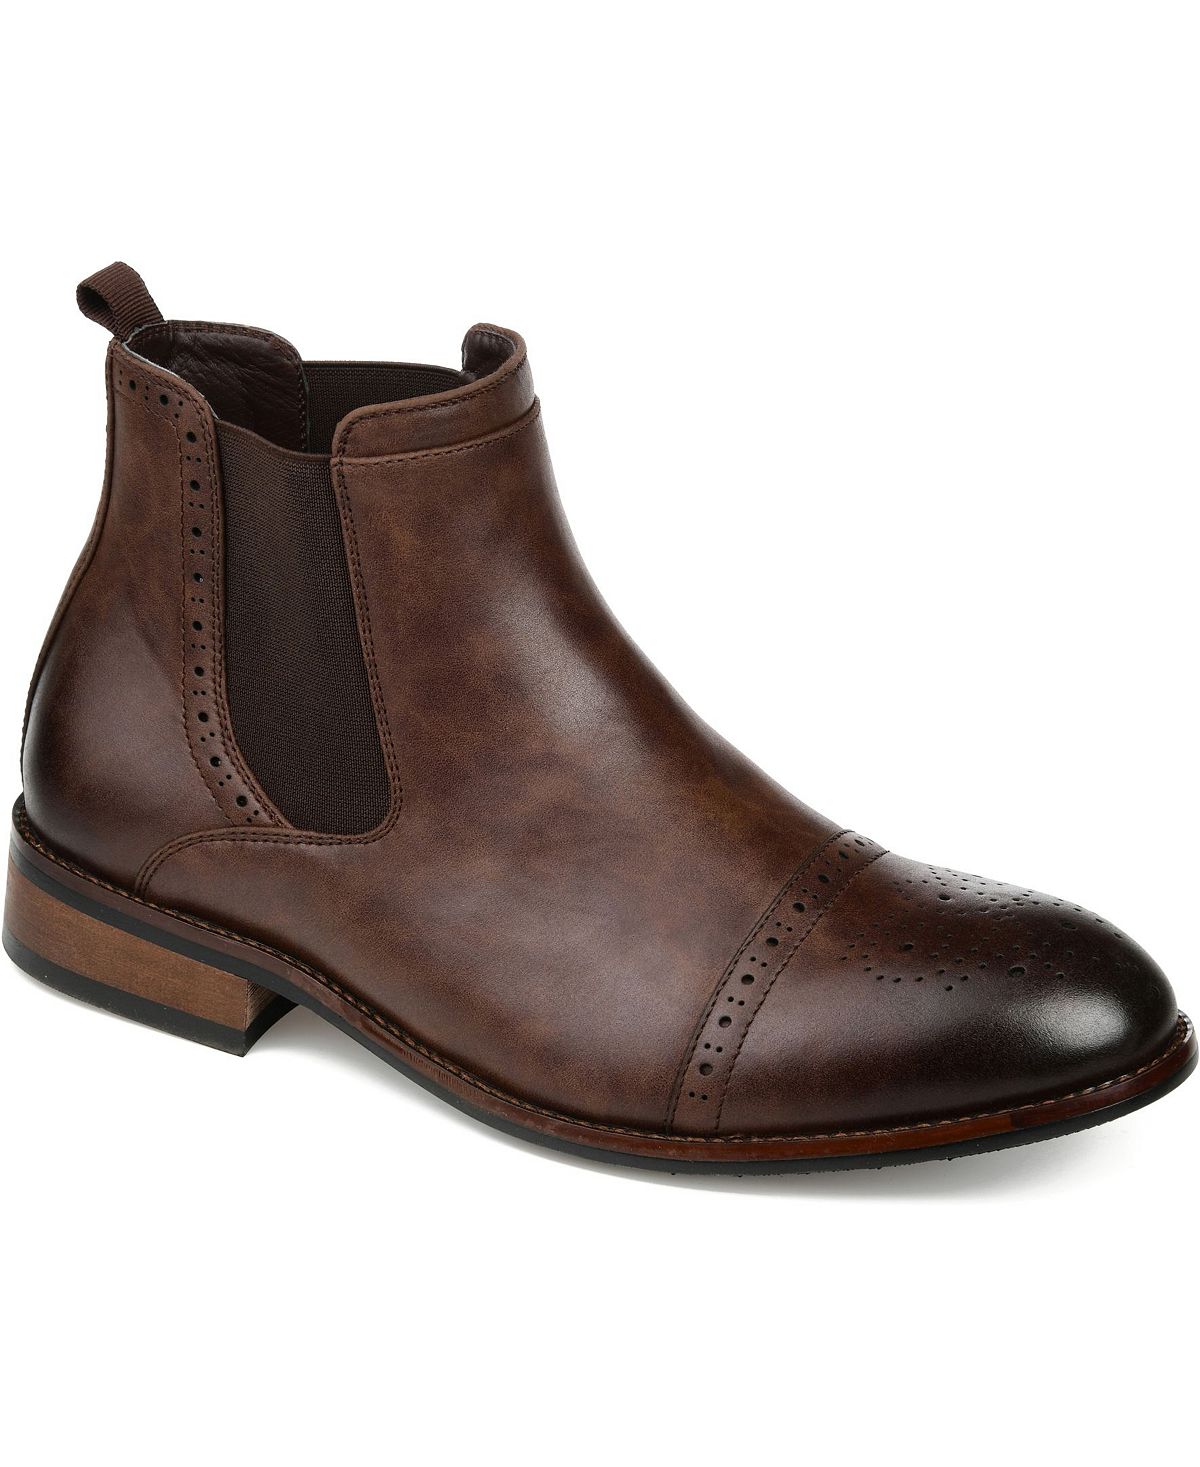 Мужские ботинки челси garrett cap toe Vance Co., коричневый